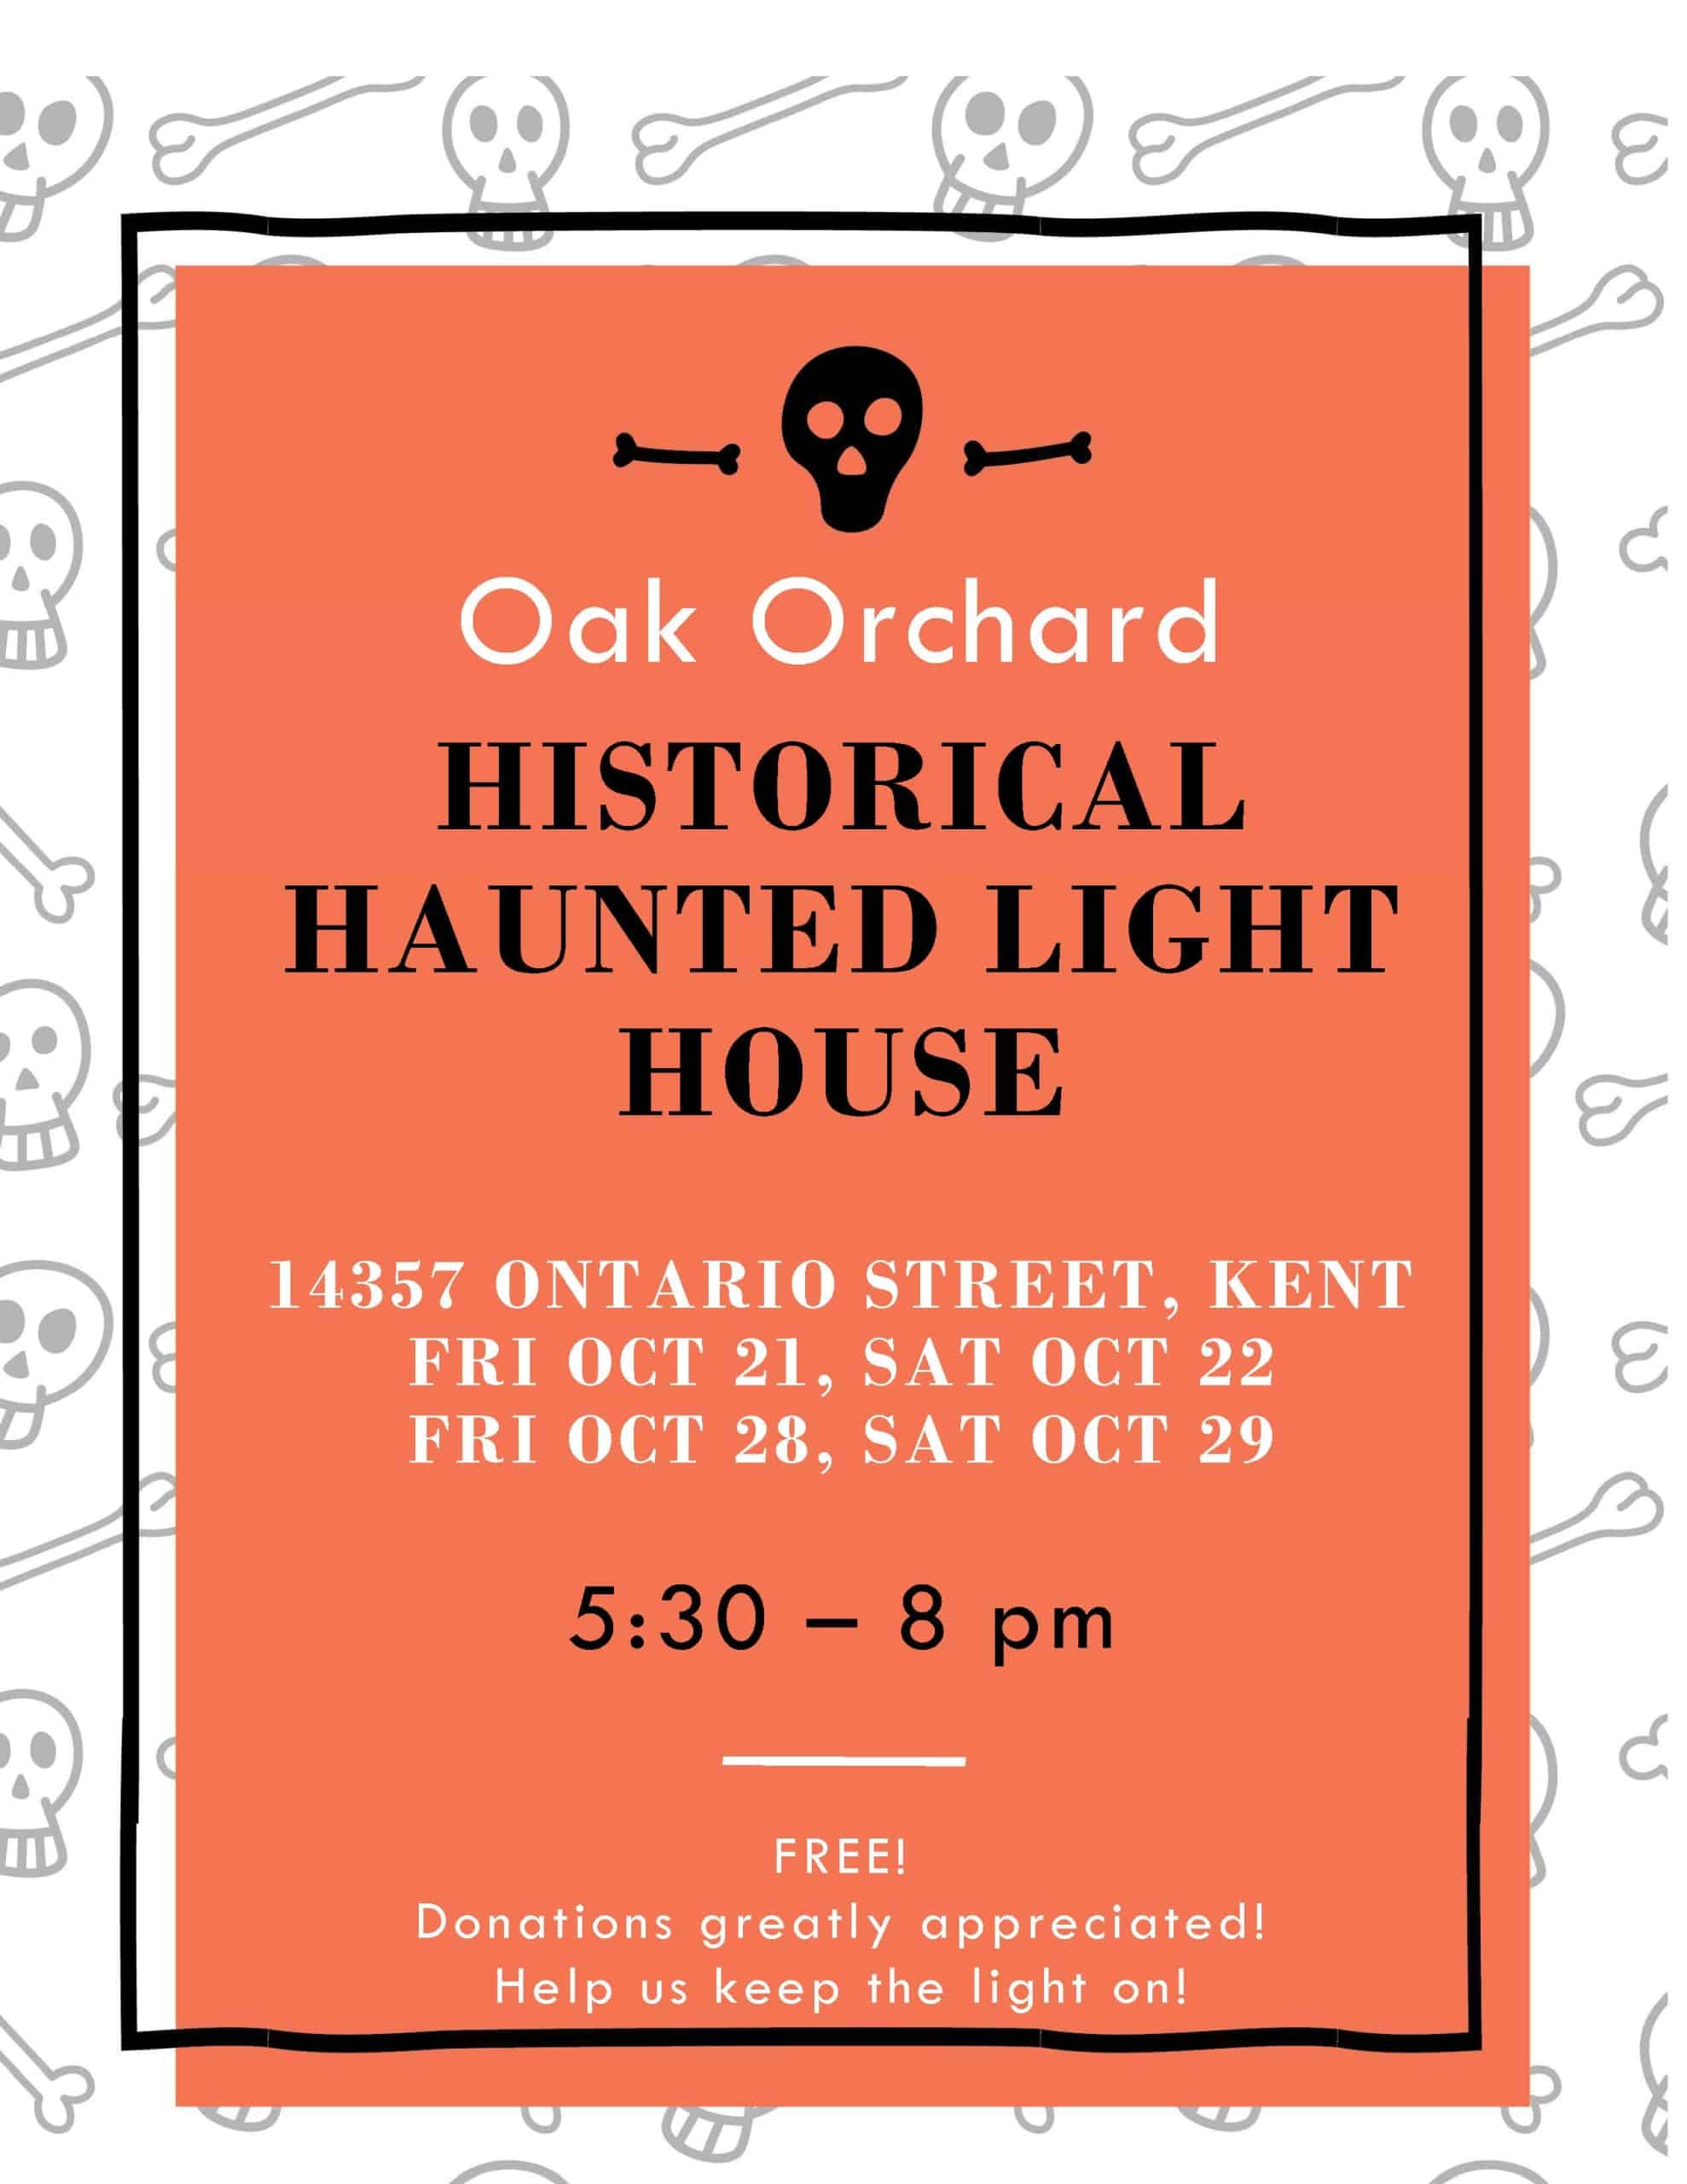 Oak Orchard Historical Haunted Lighthouse